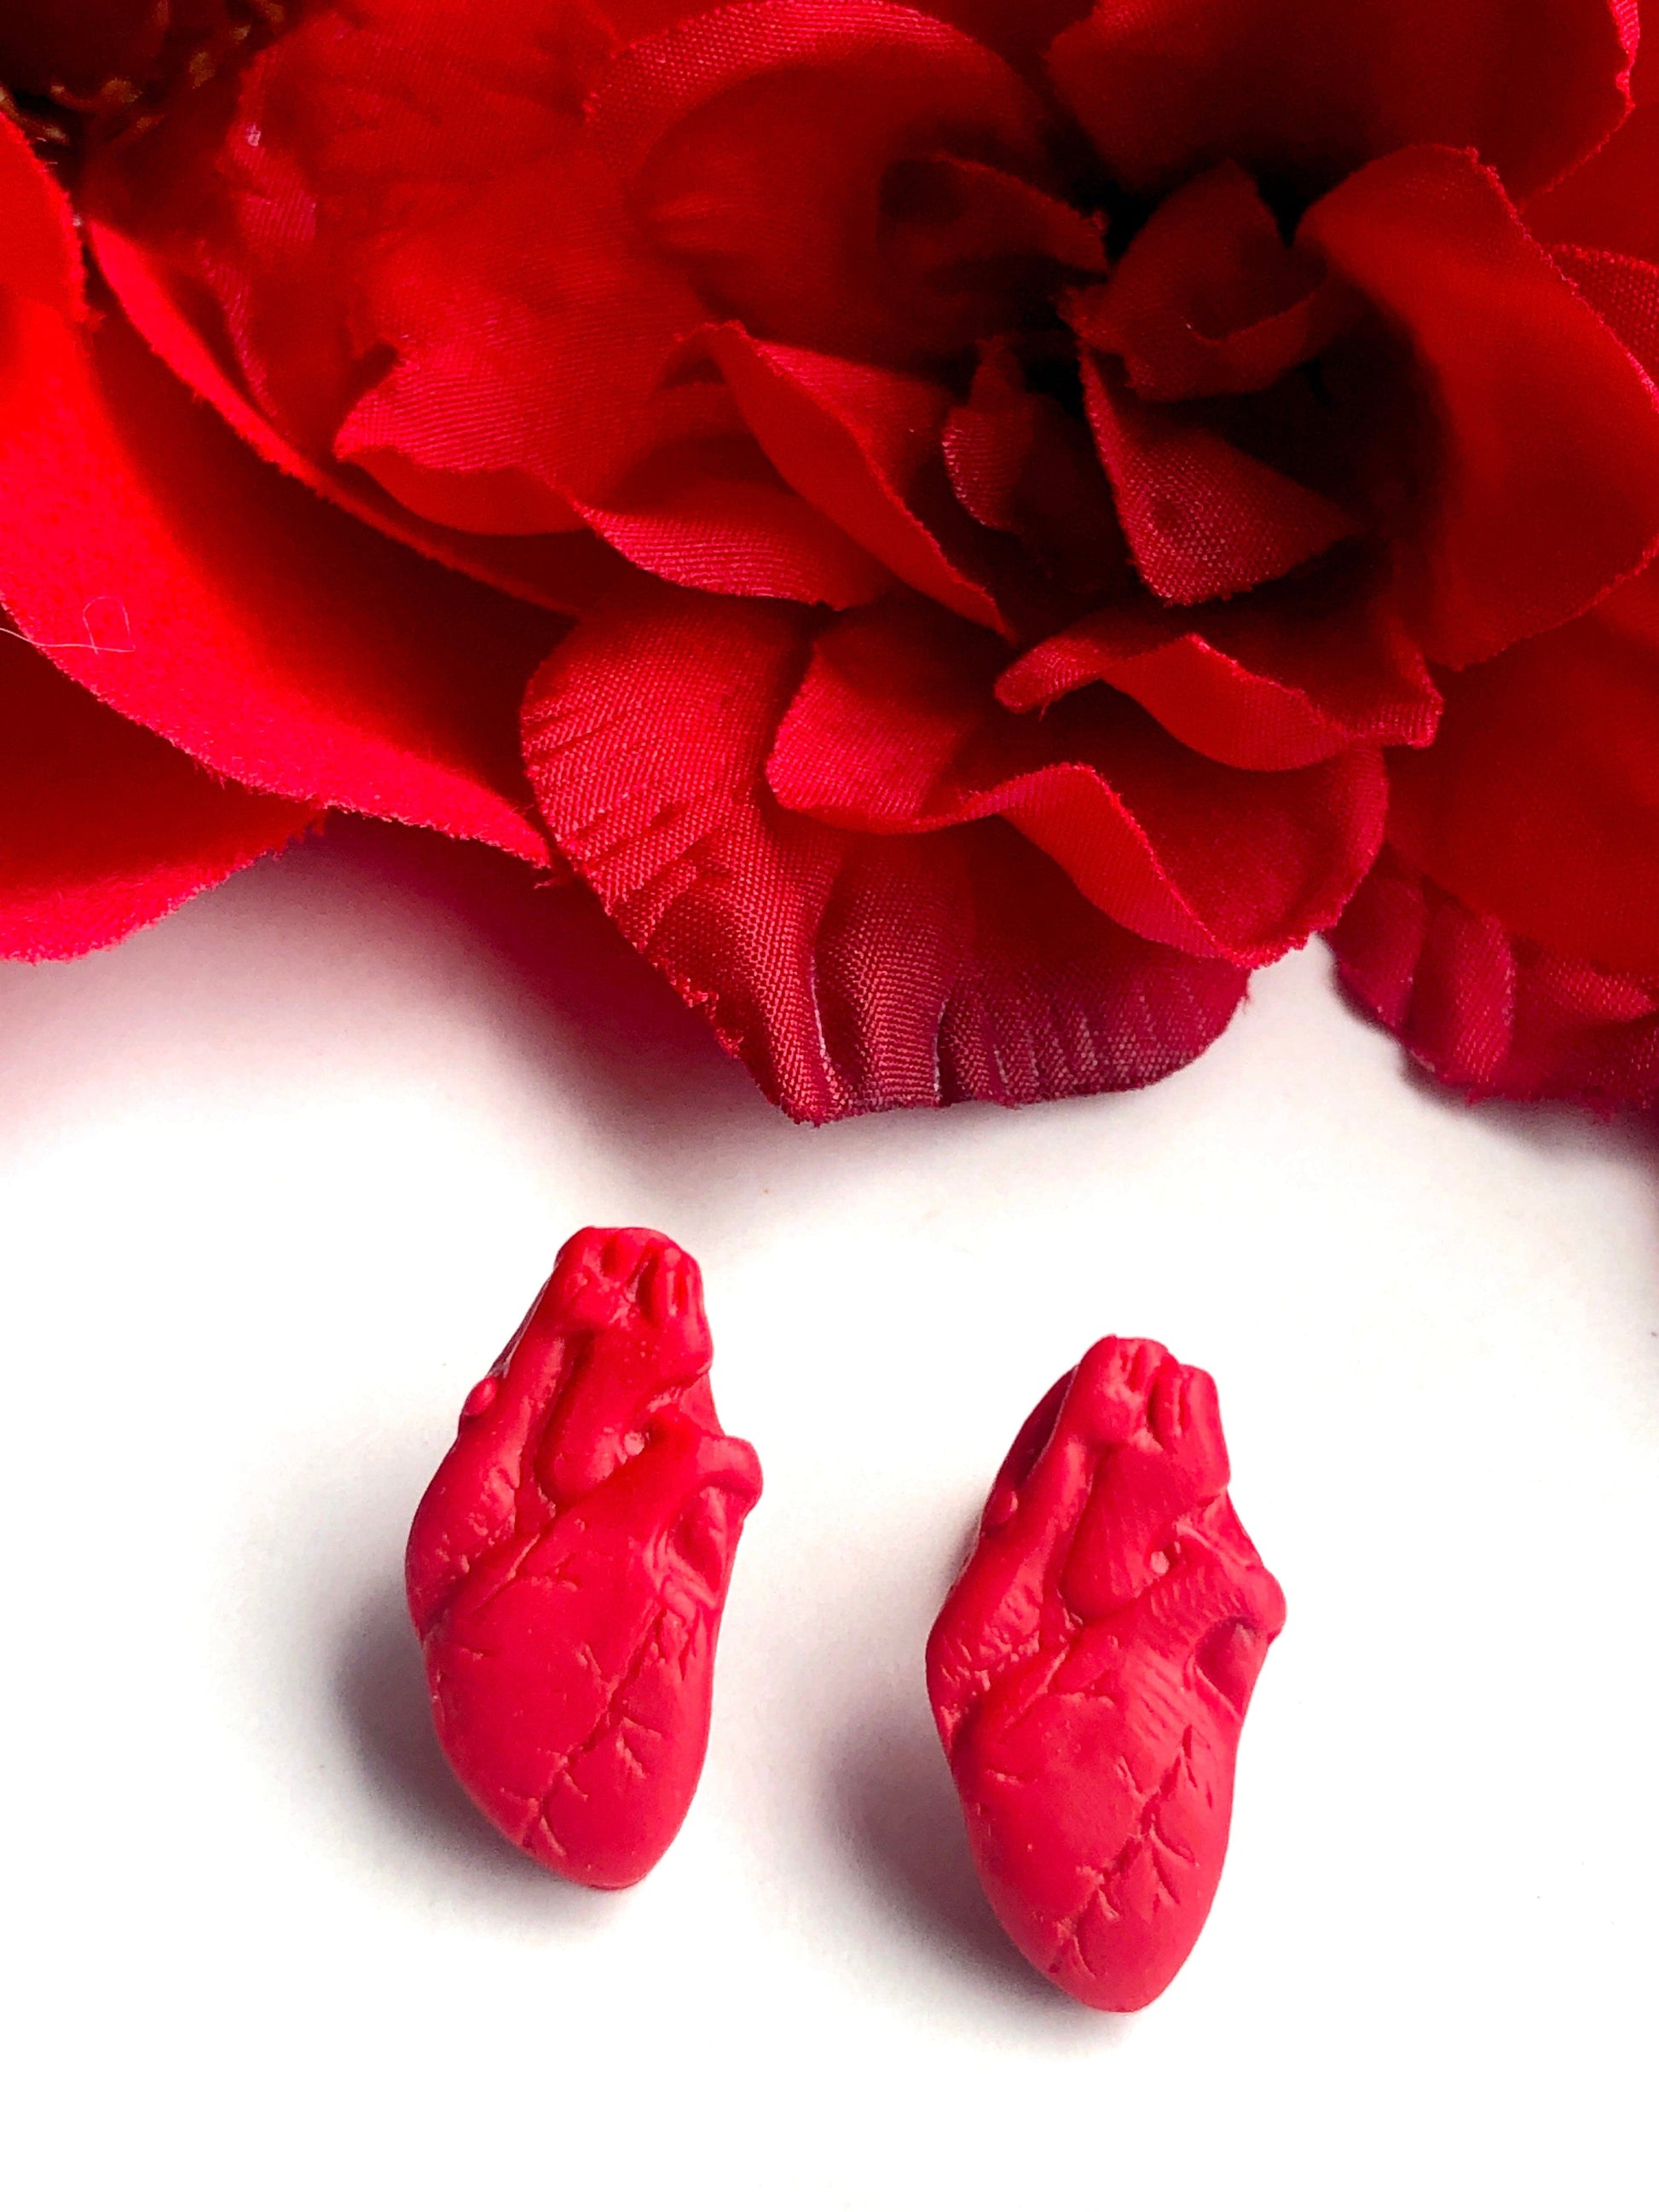 Earrings Anatomical Heart Stud Earrings Red Anatomical Heart Earrings, Polymer Clay Heart Earrings